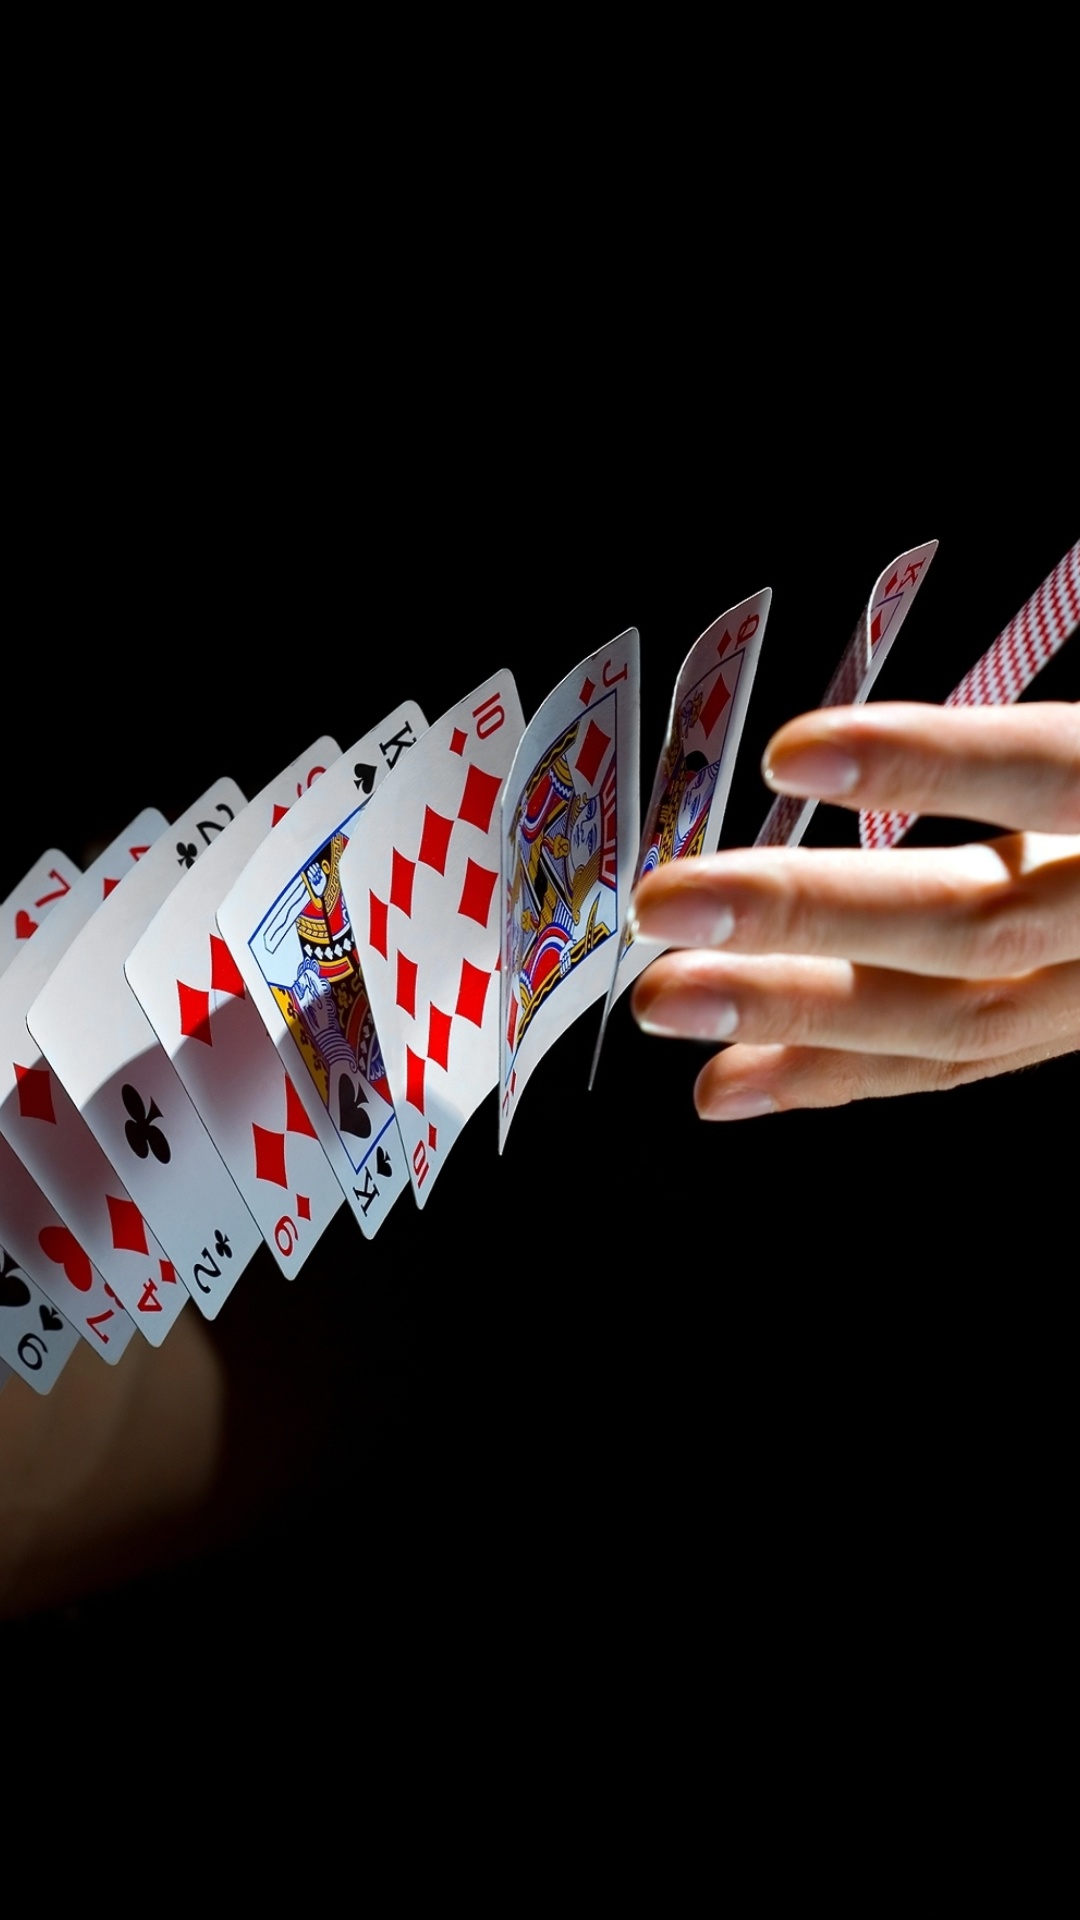 Das Playing cards trick Wallpaper 1080x1920